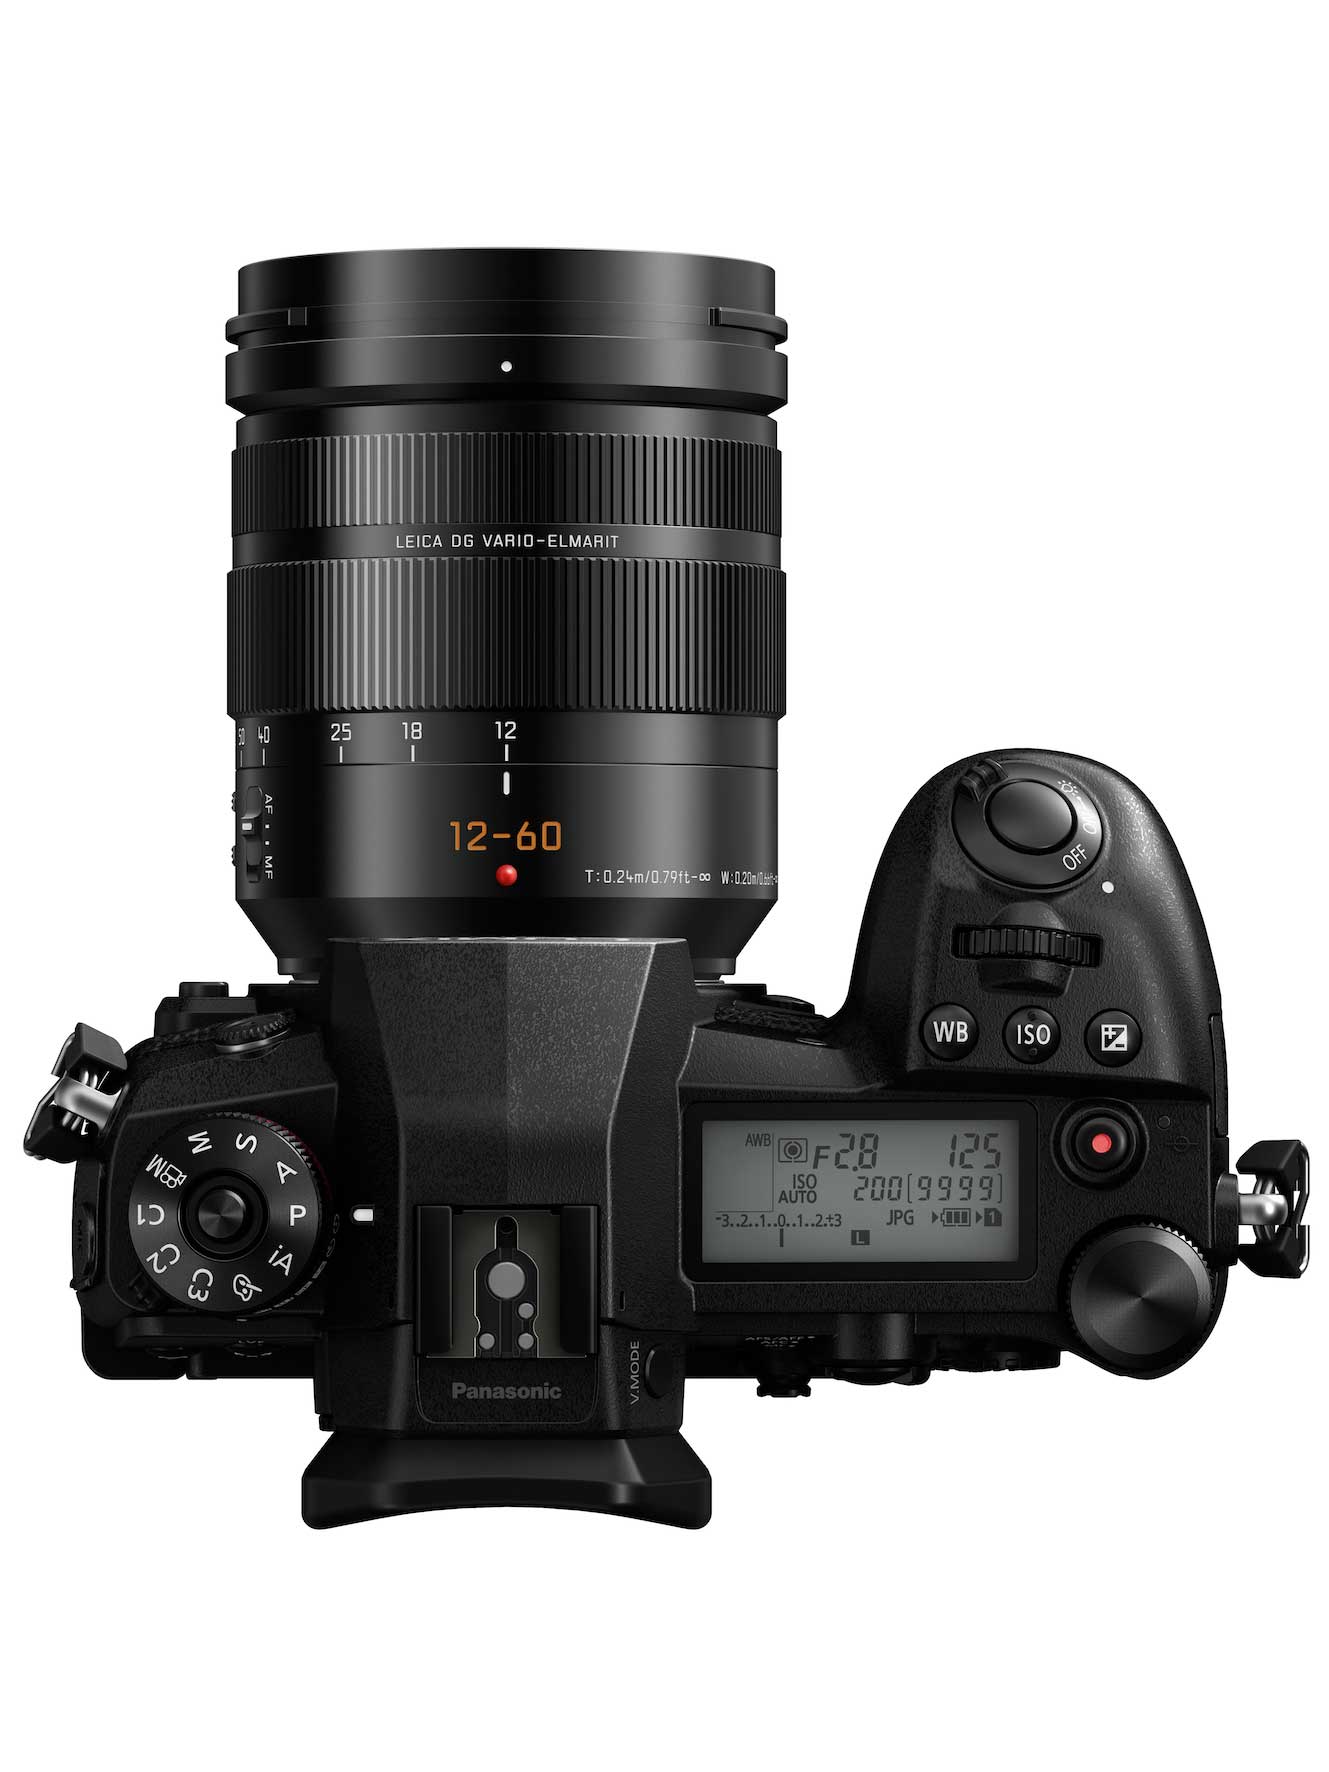 Schnelle Micro-Four-Thirds-Kamera: Panasonic Lumix G9